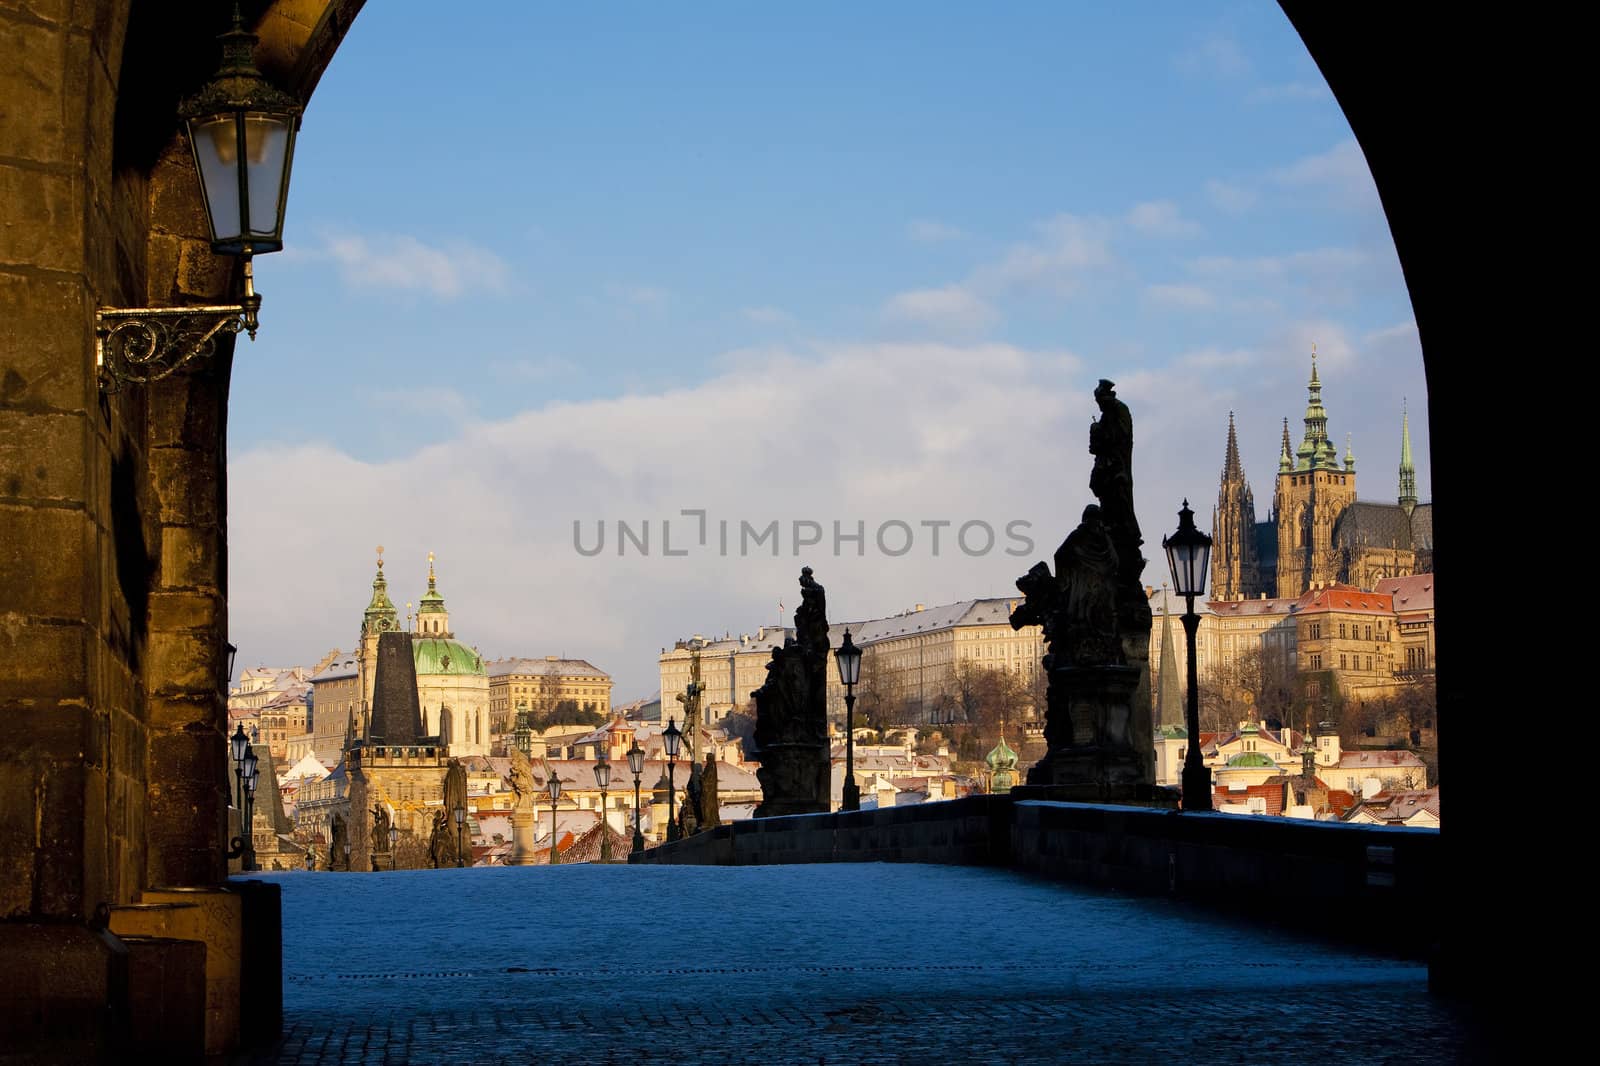 Charles Bridge in winter, Prague, Czech Republic by phbcz